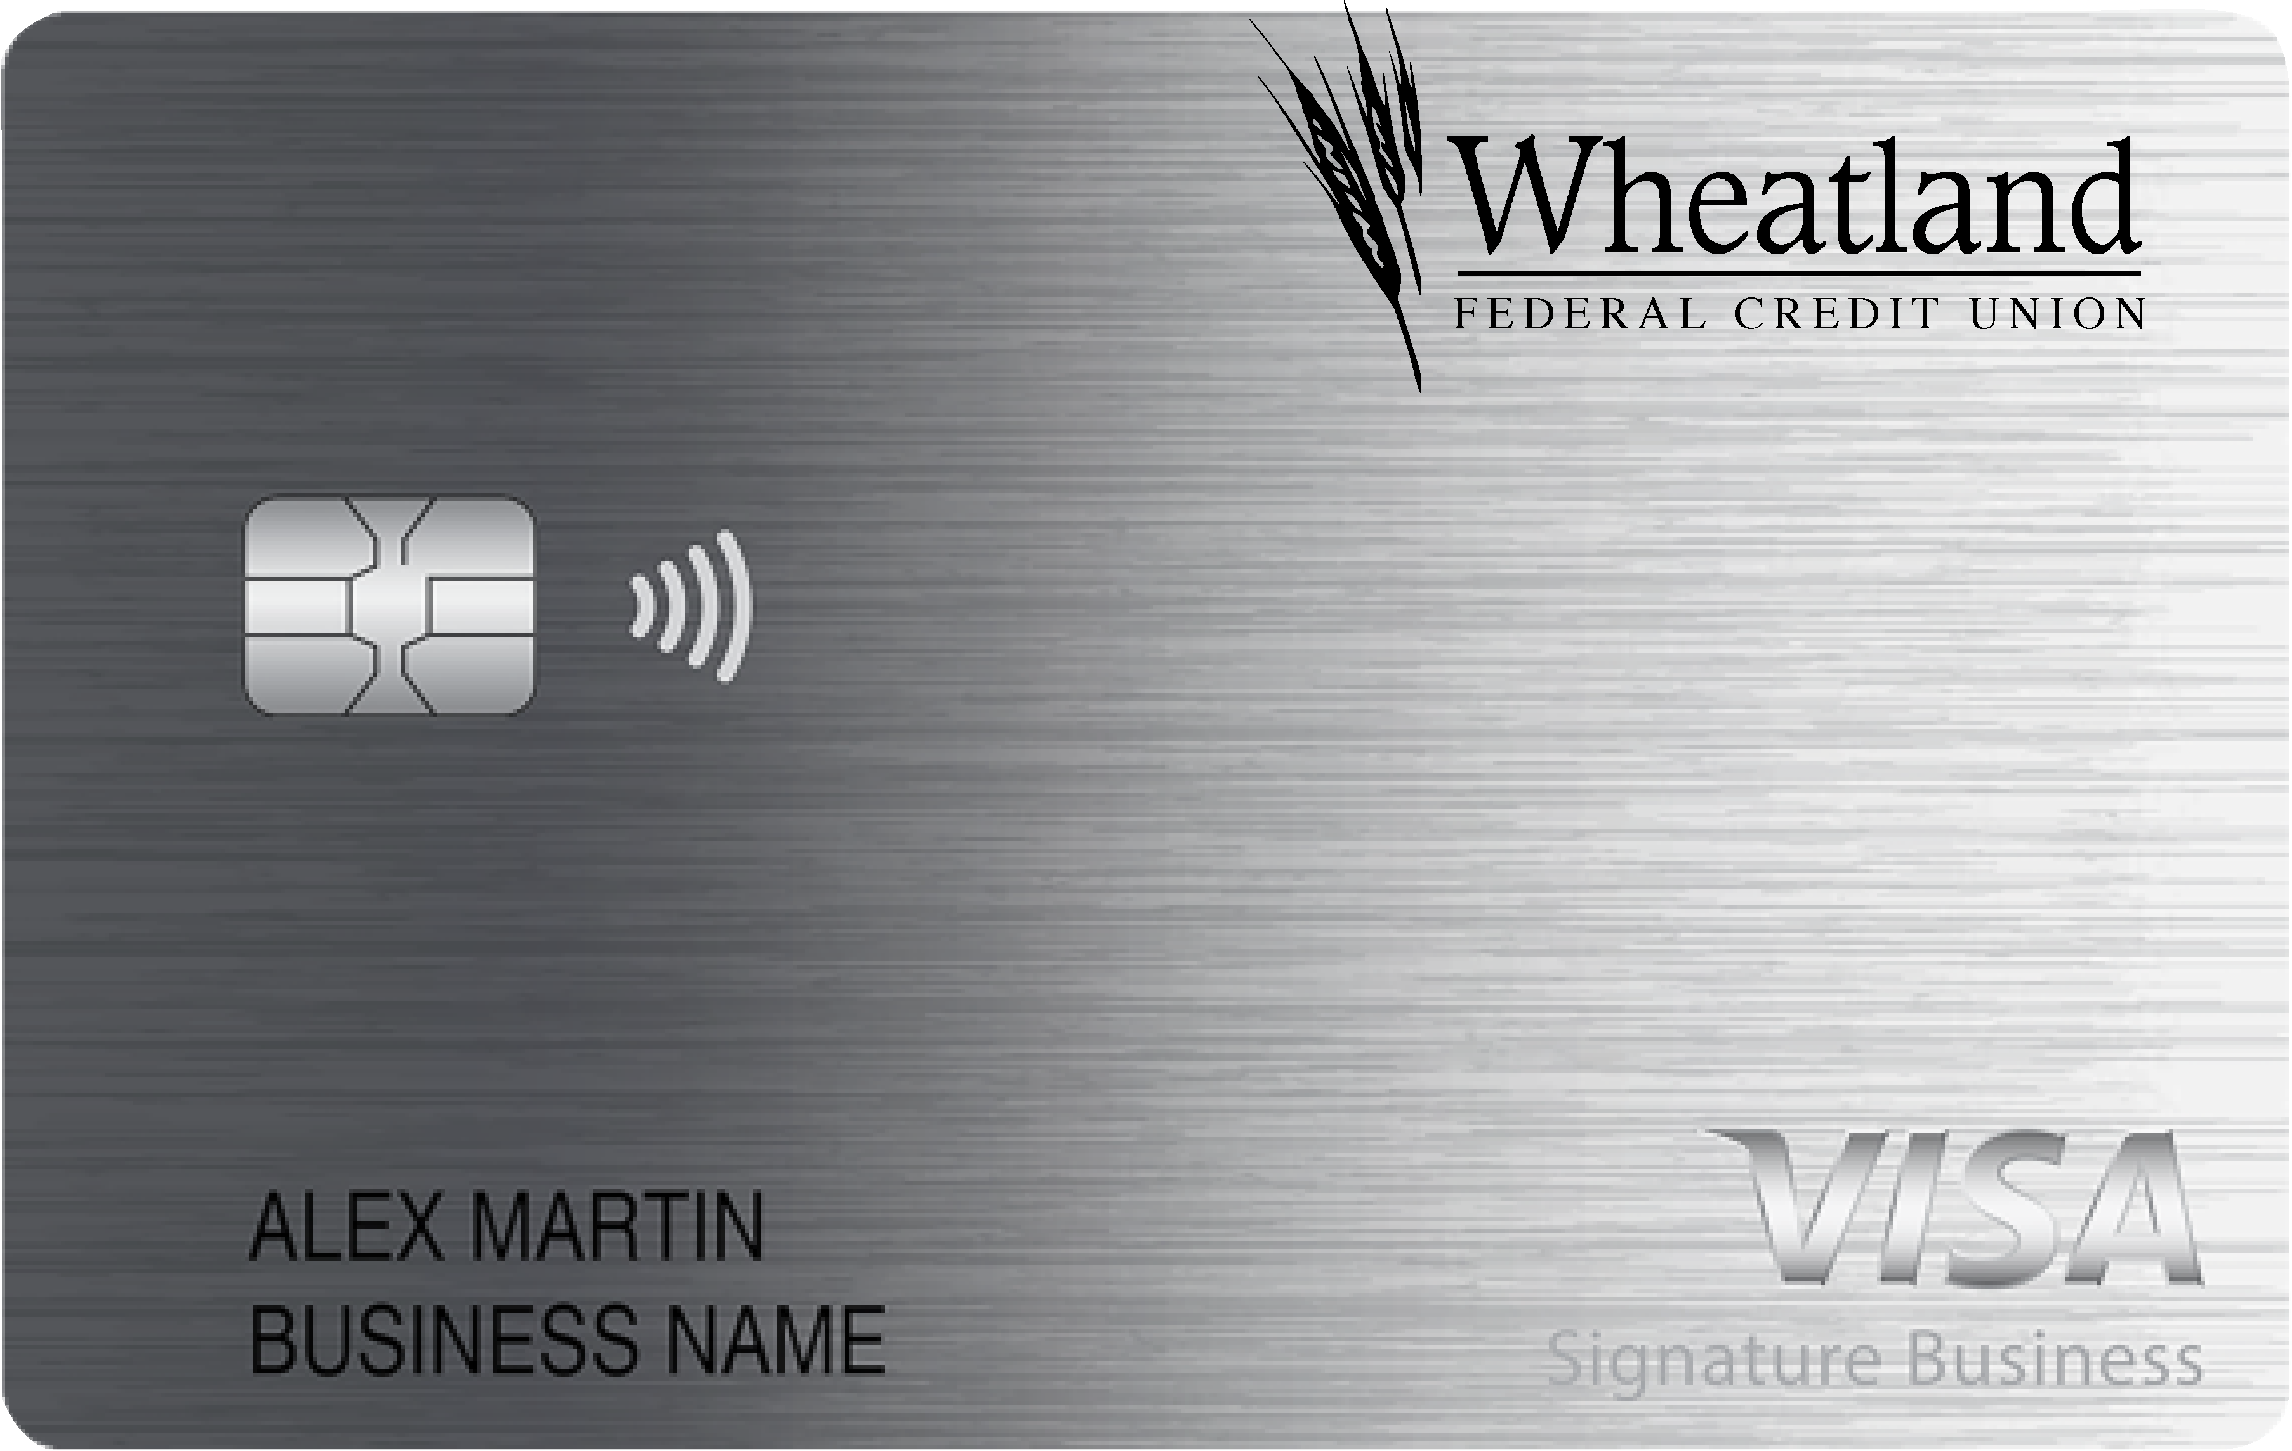 Wheatland Federal Credit Union Business Card